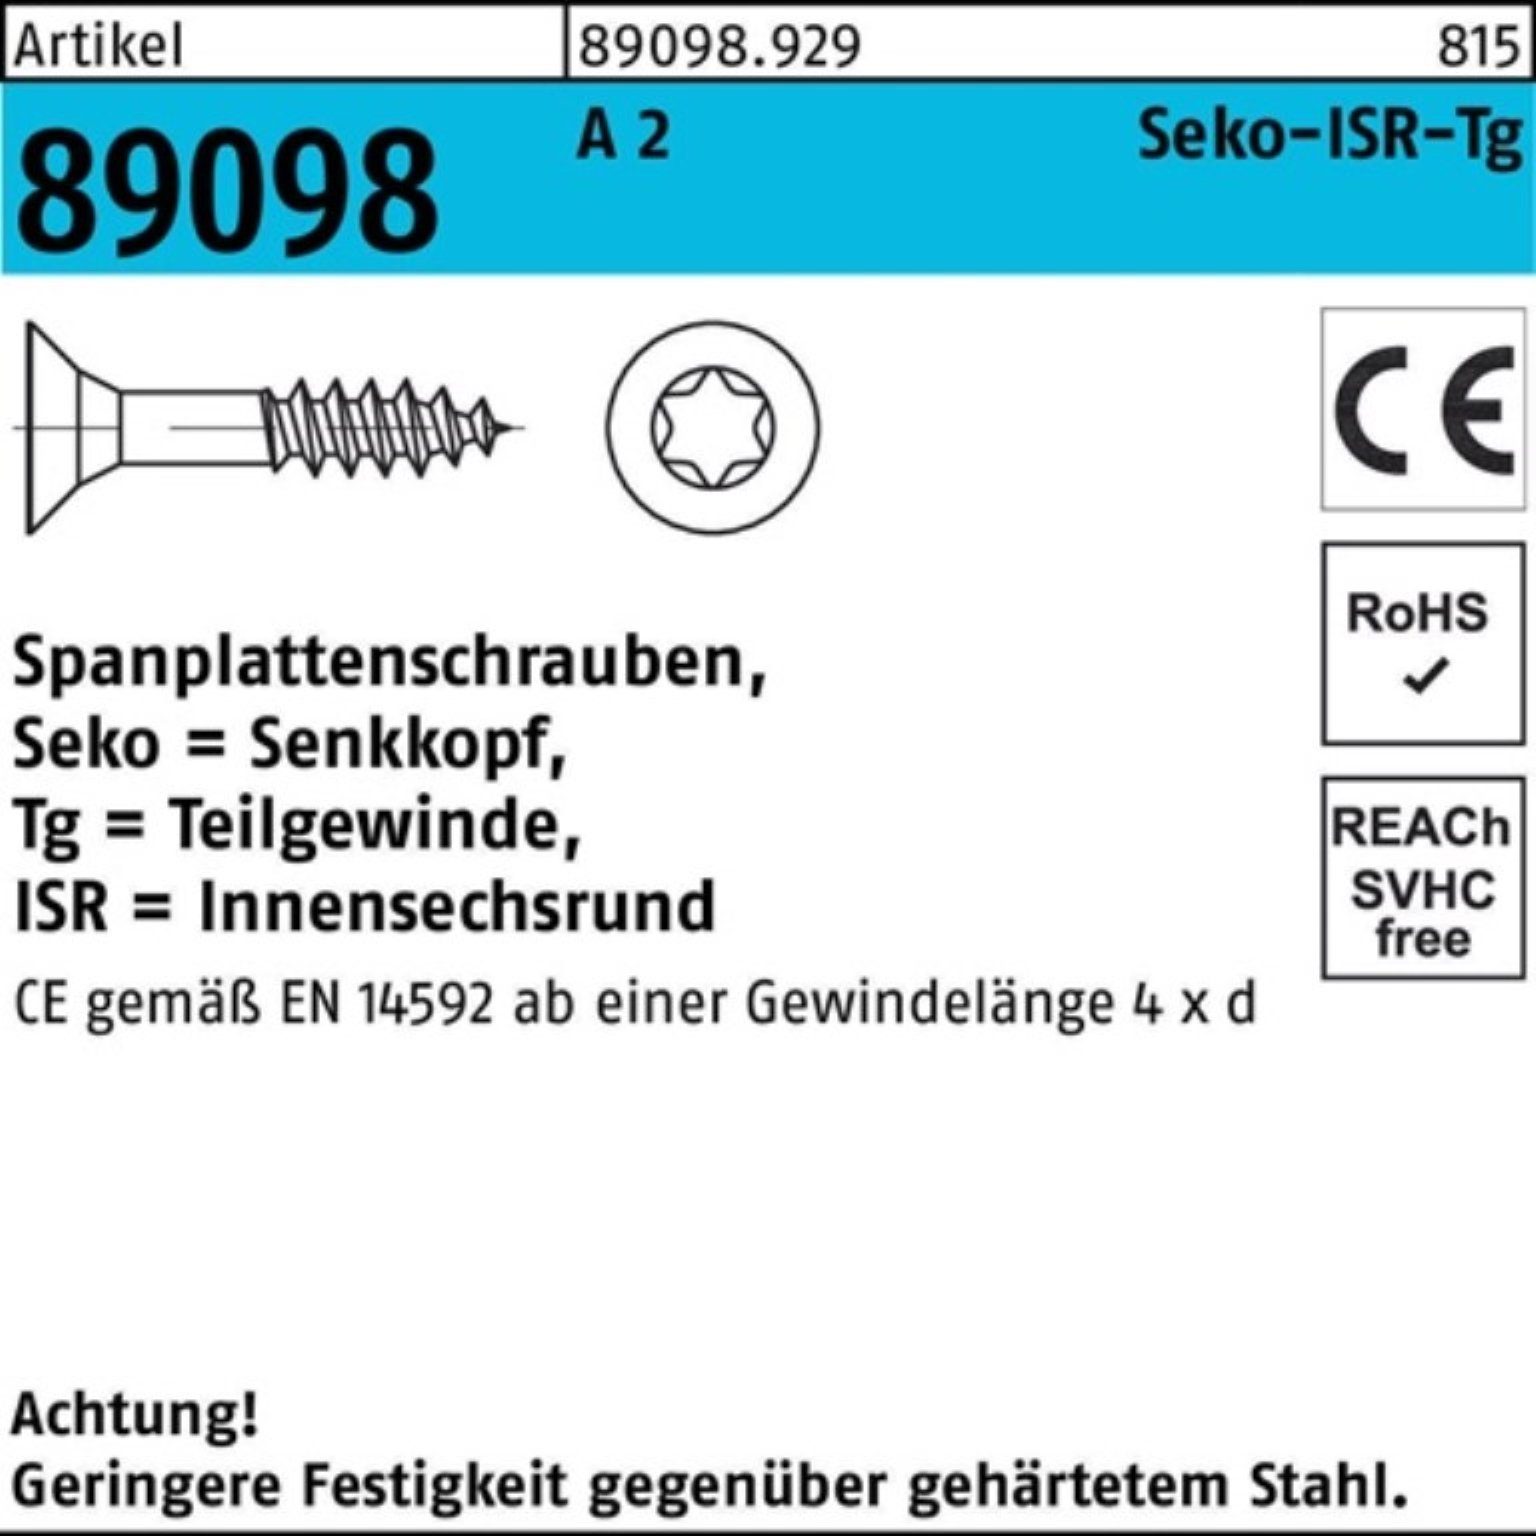 Reyher Spanplattenschraube 1000er Pack Spanplattenschraube A 2 4x 50-T20 ISR 89098 R TG SEKO 1000